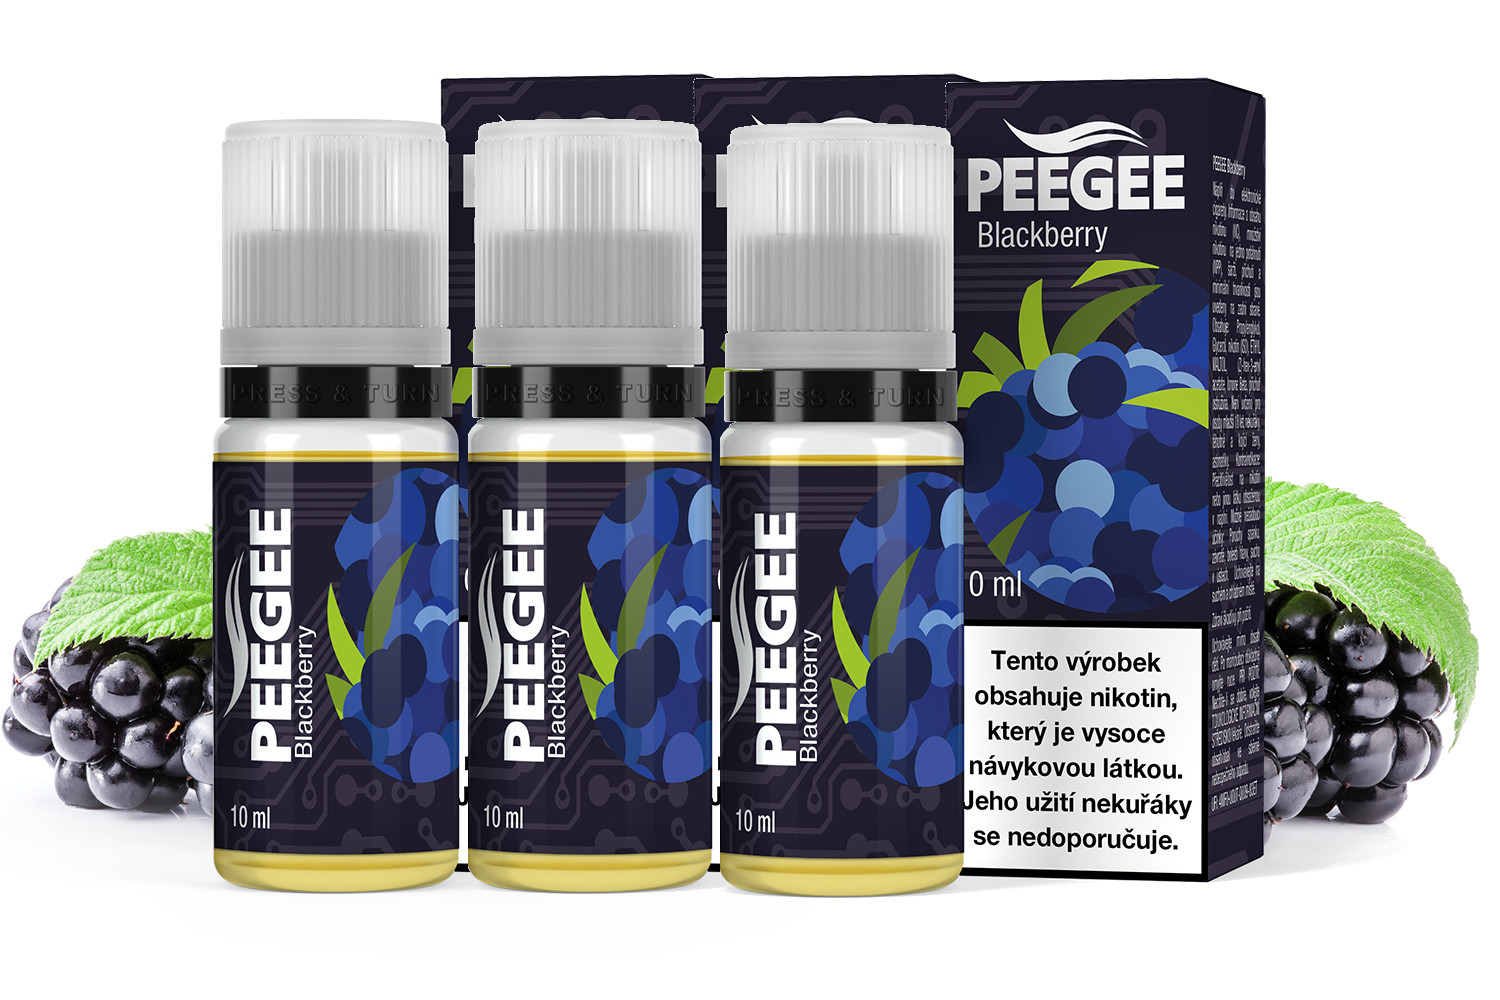 PEEGEE - Ostružina (Blackberry) 3x10ml Obsah nikotinu: 18mg